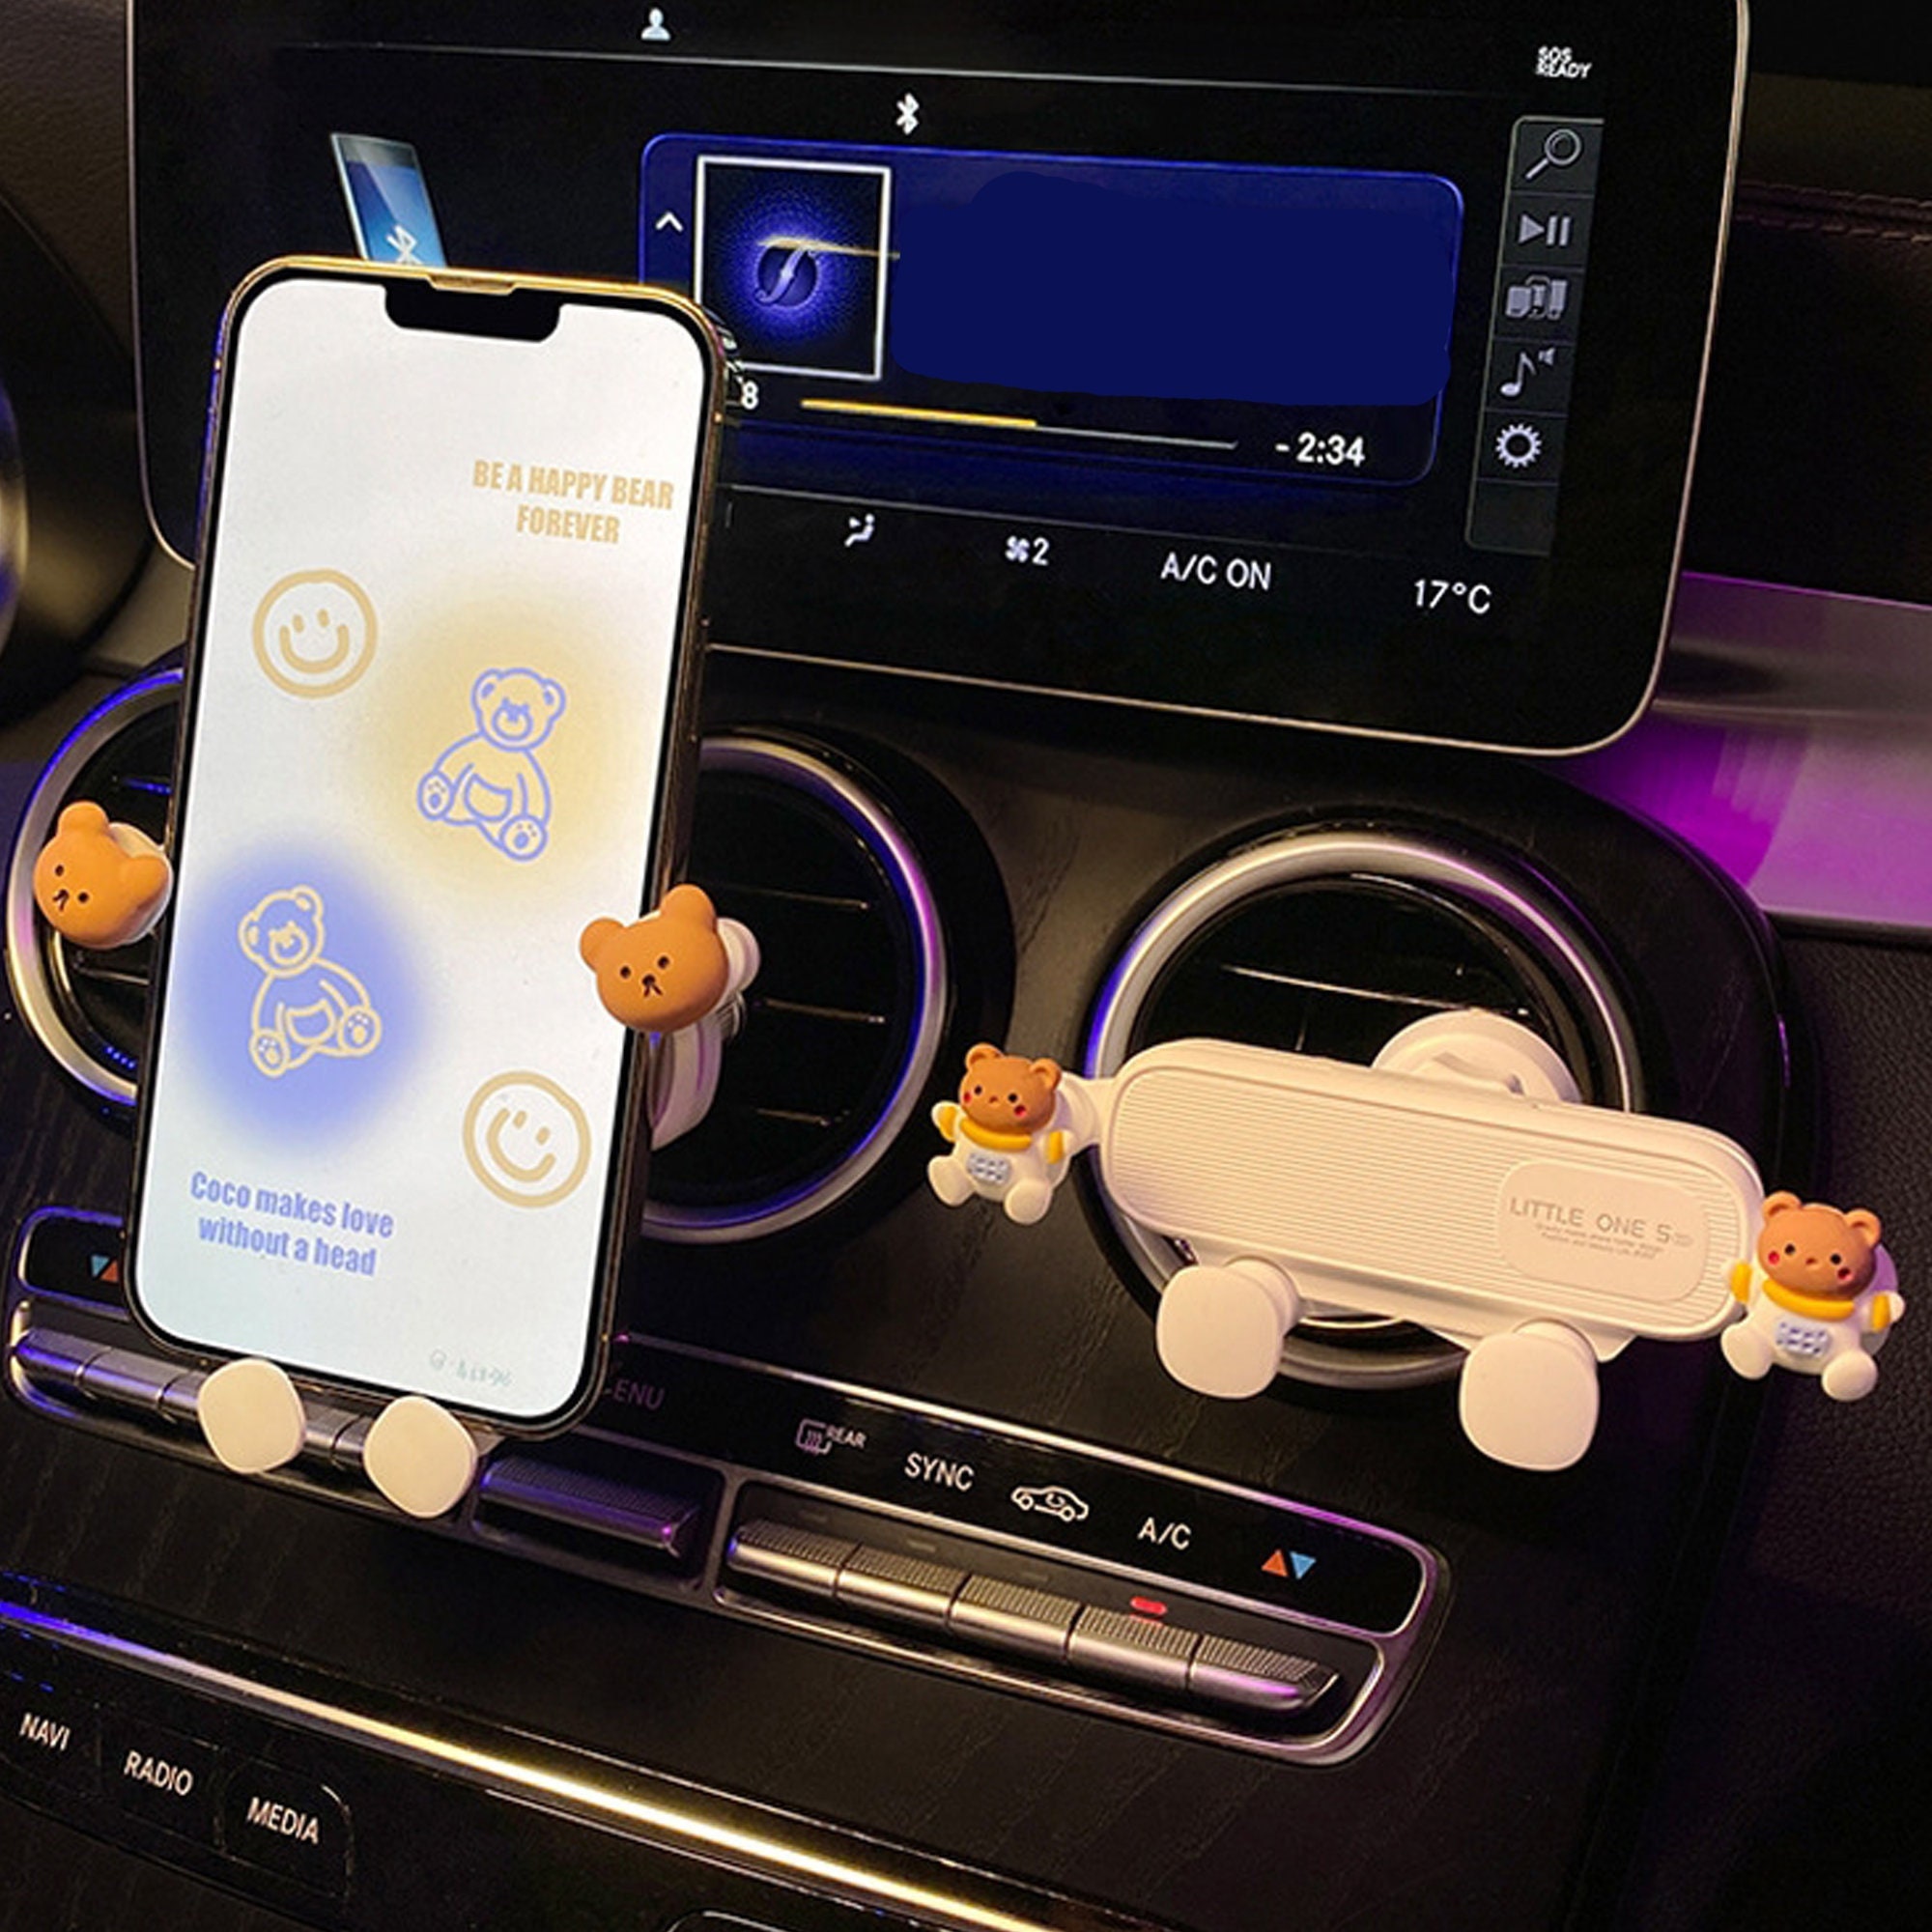 SMART 453 Car Phone Holder, Support for Navigation When Charging